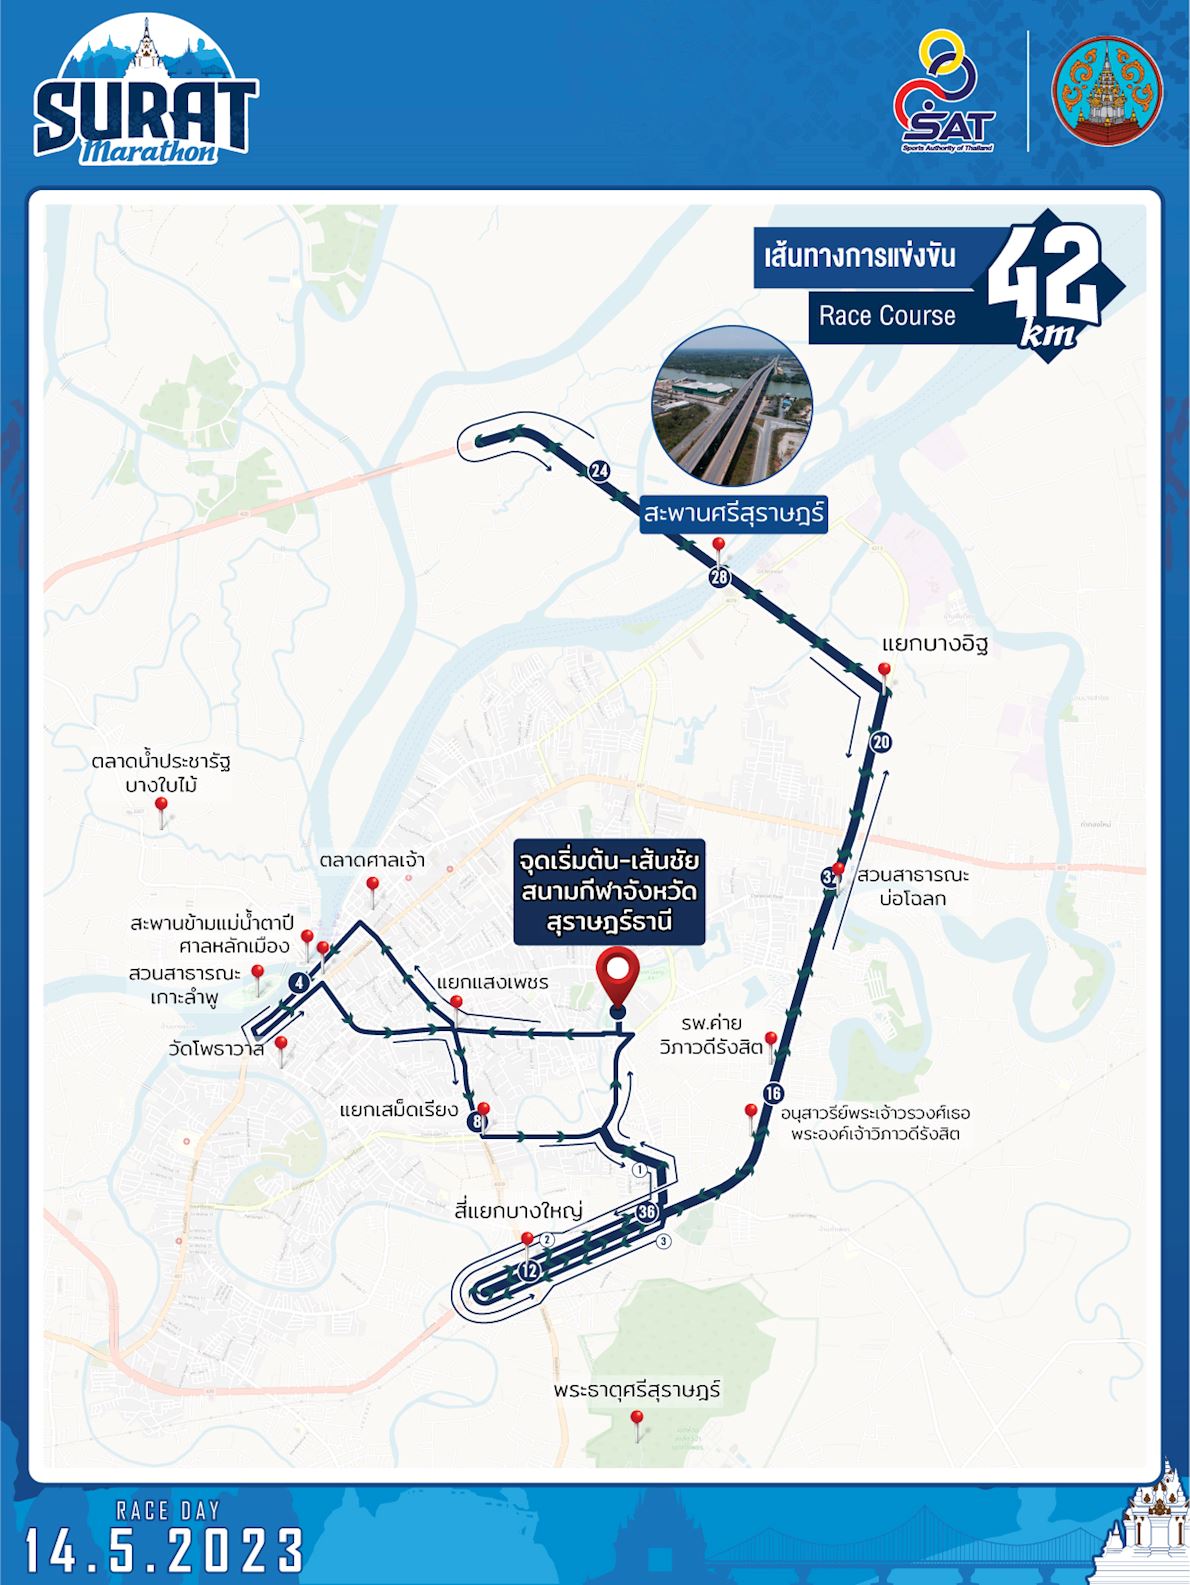 Surat Marathon Route Map